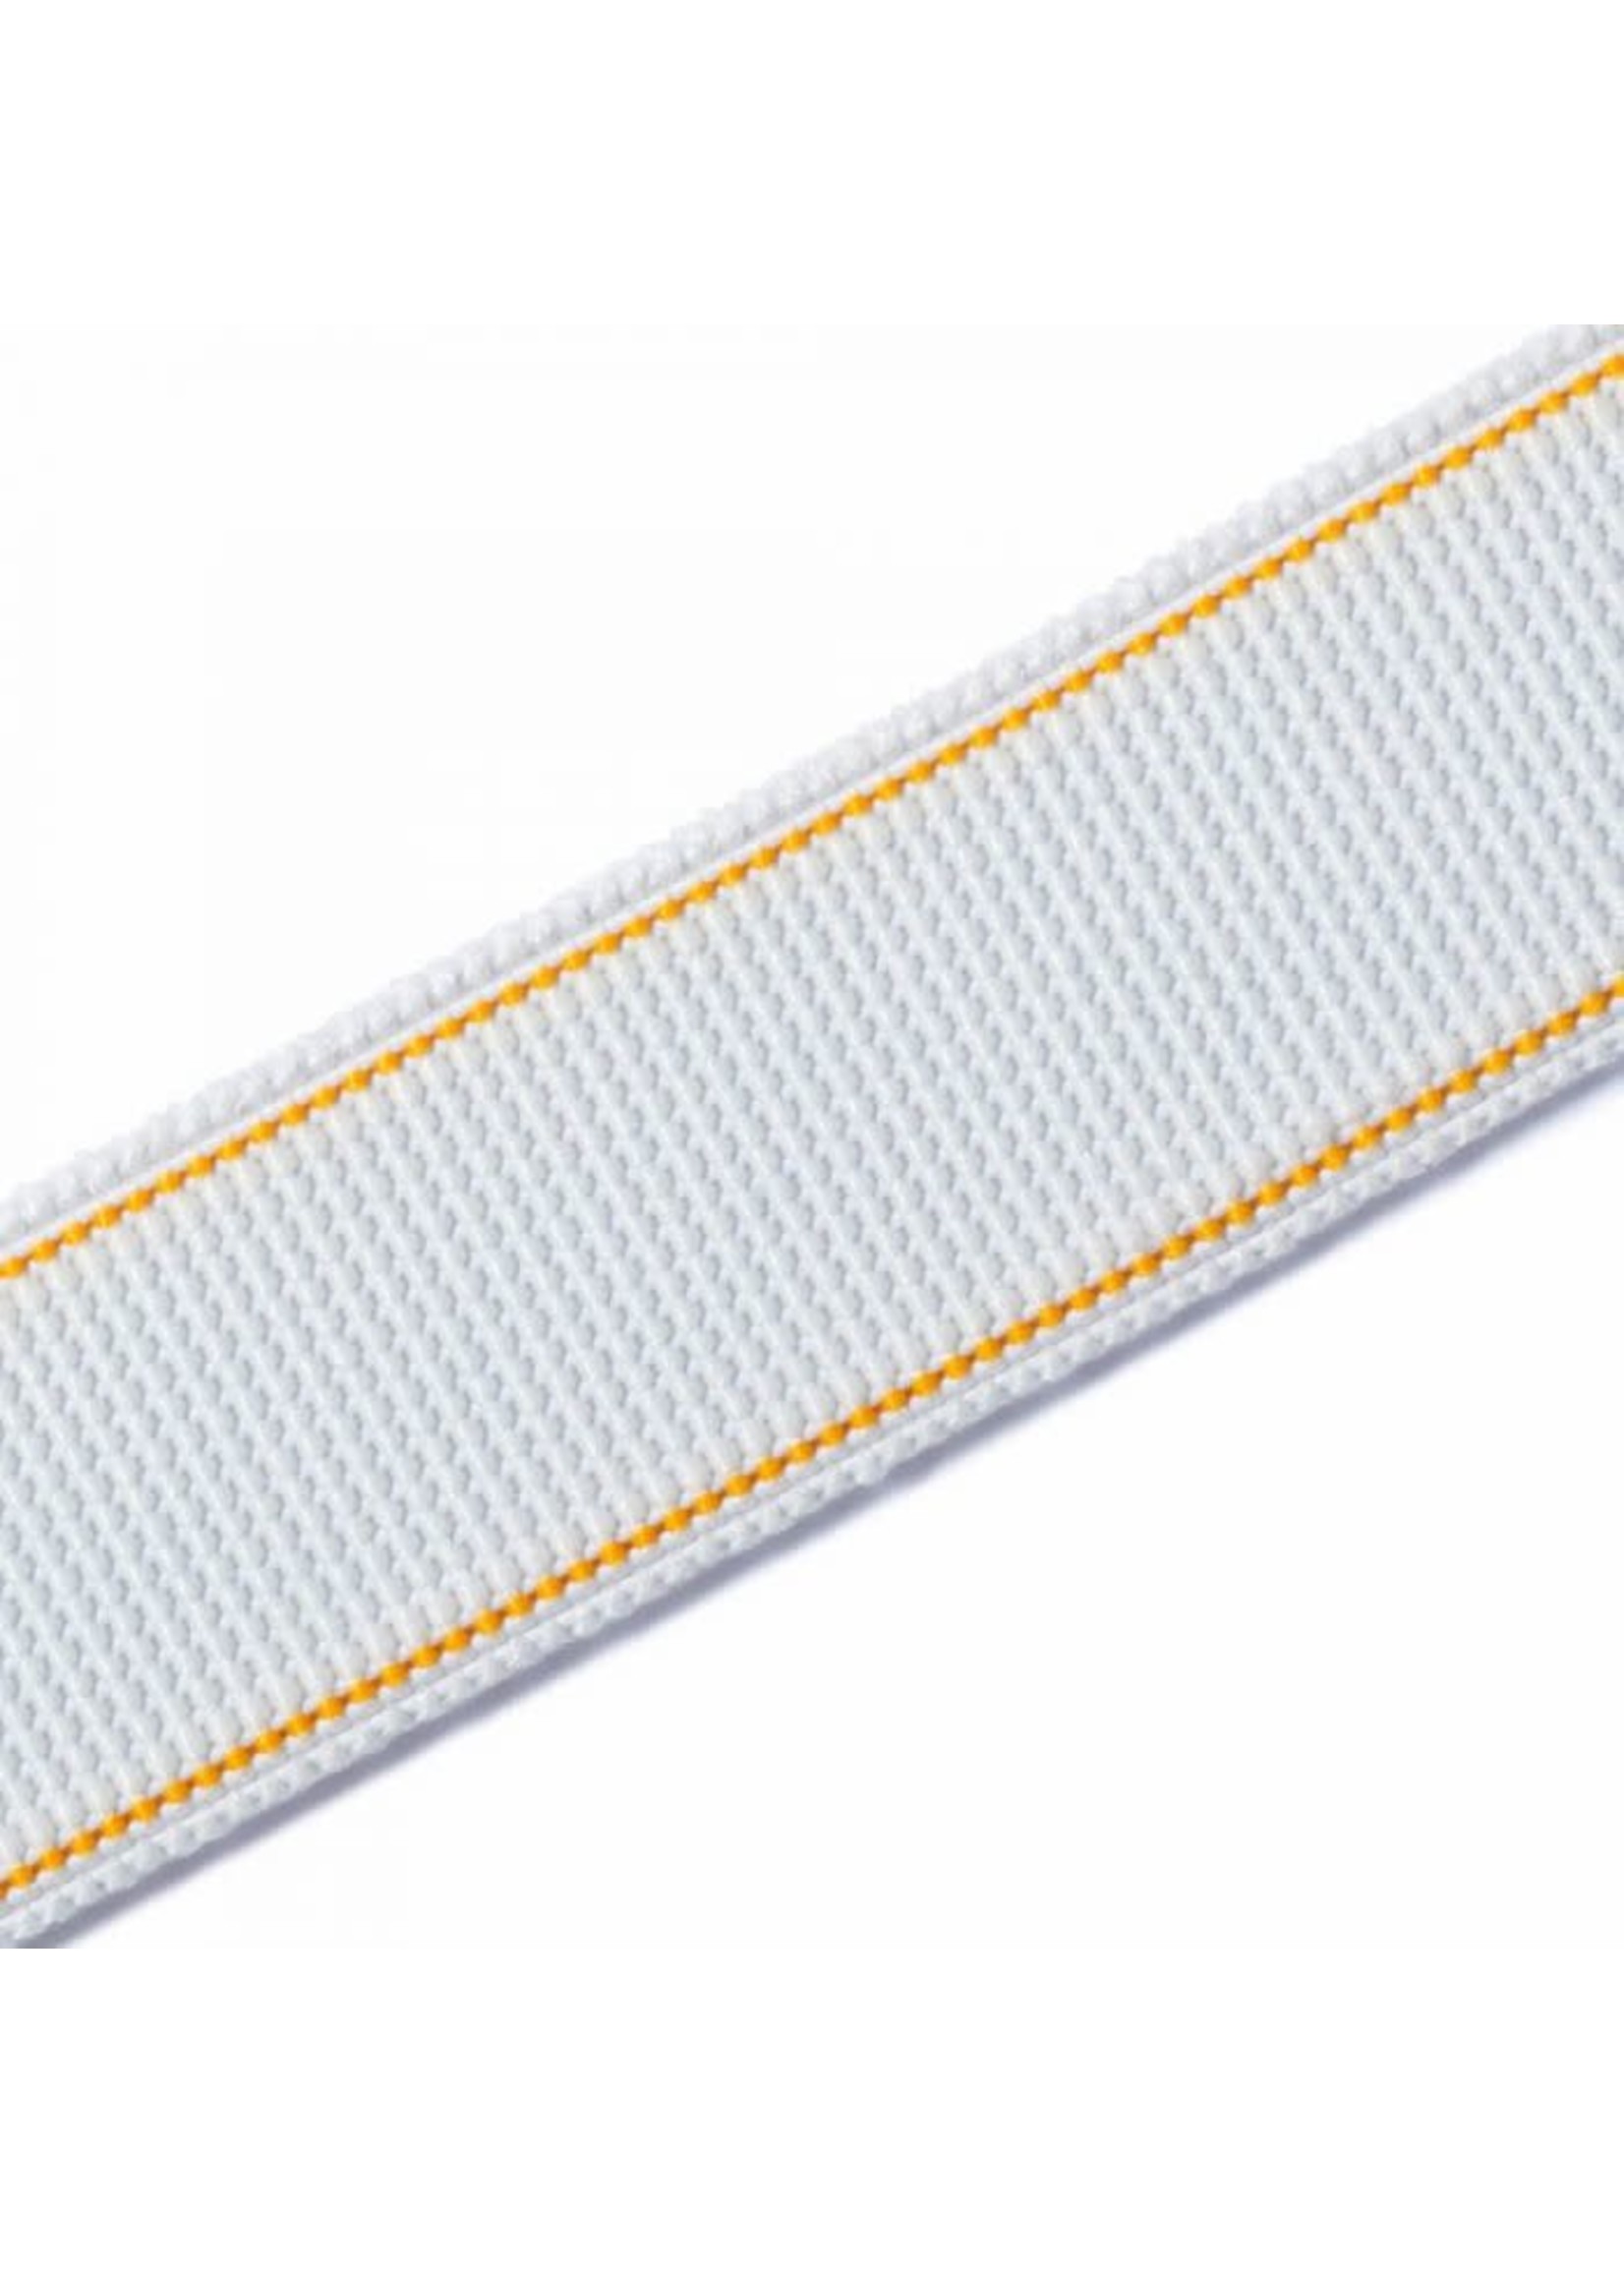 Prym Prym band elastiek 10mm - wit